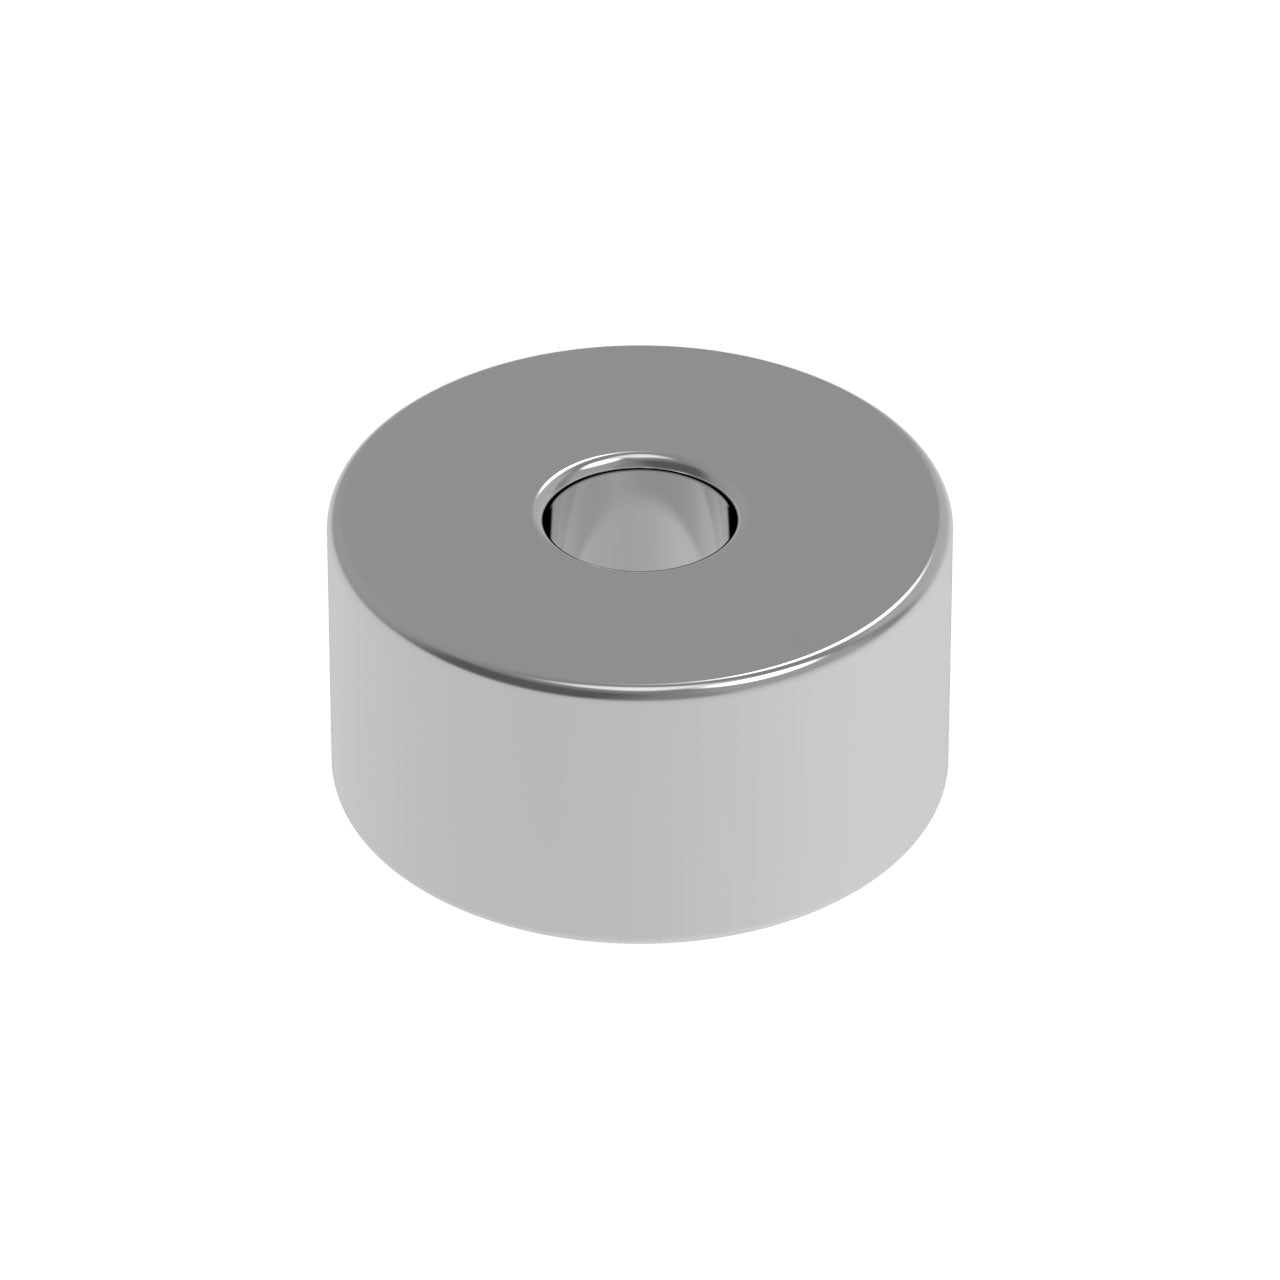 HiQ Parts Neodymium Magnet N52 Round Shape with Shaft Hole Diameter 4mm x Height 2mm (8pcs)